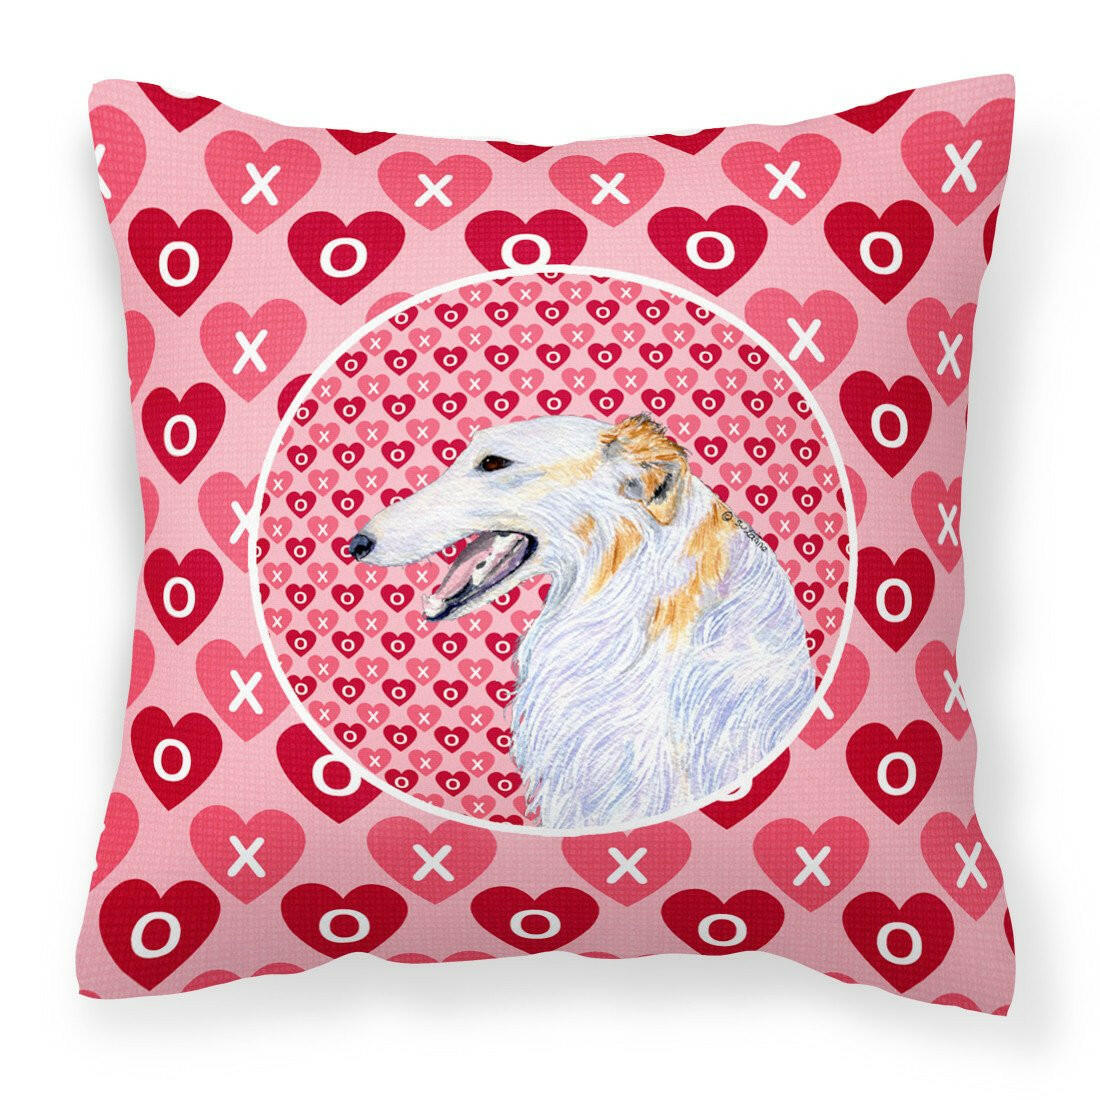 Borzoi Hearts Love and Valentine's Day Portrait Fabric Decorative Pillow SS4475PW1414 by Caroline's Treasures